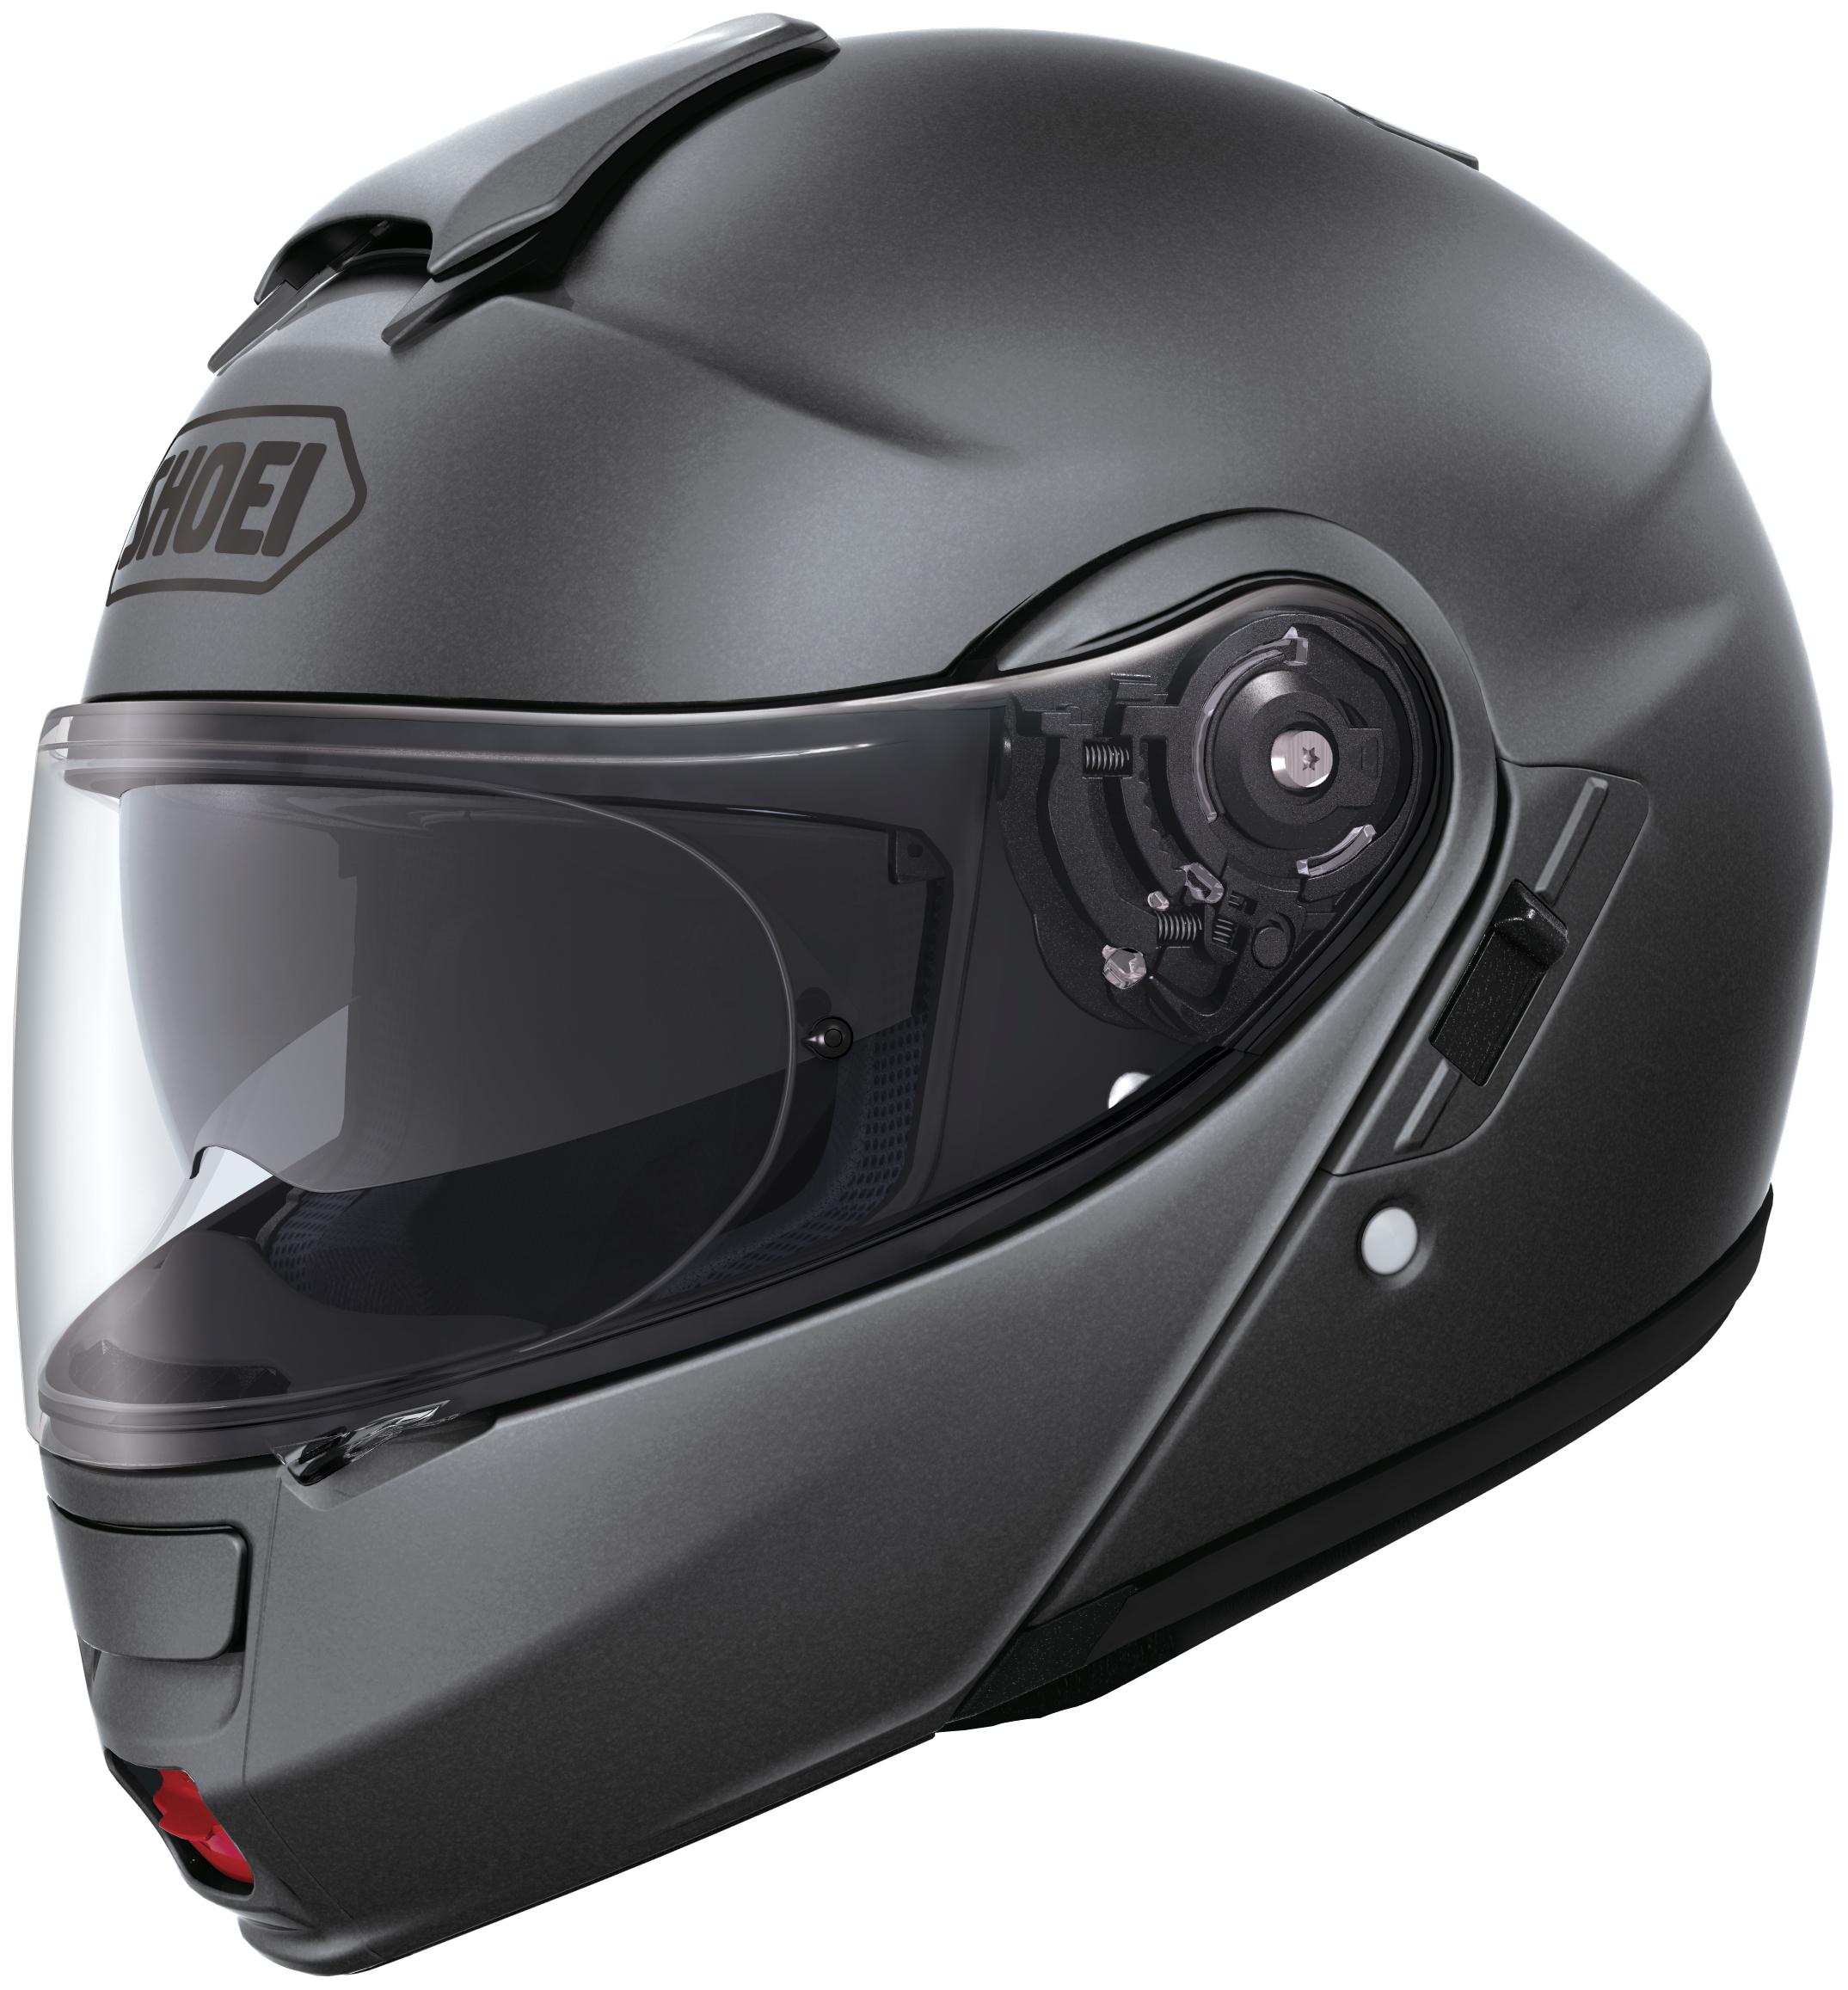 Free 2-day shipping! shoei neotec matte deep grey modular helmet motorcycle